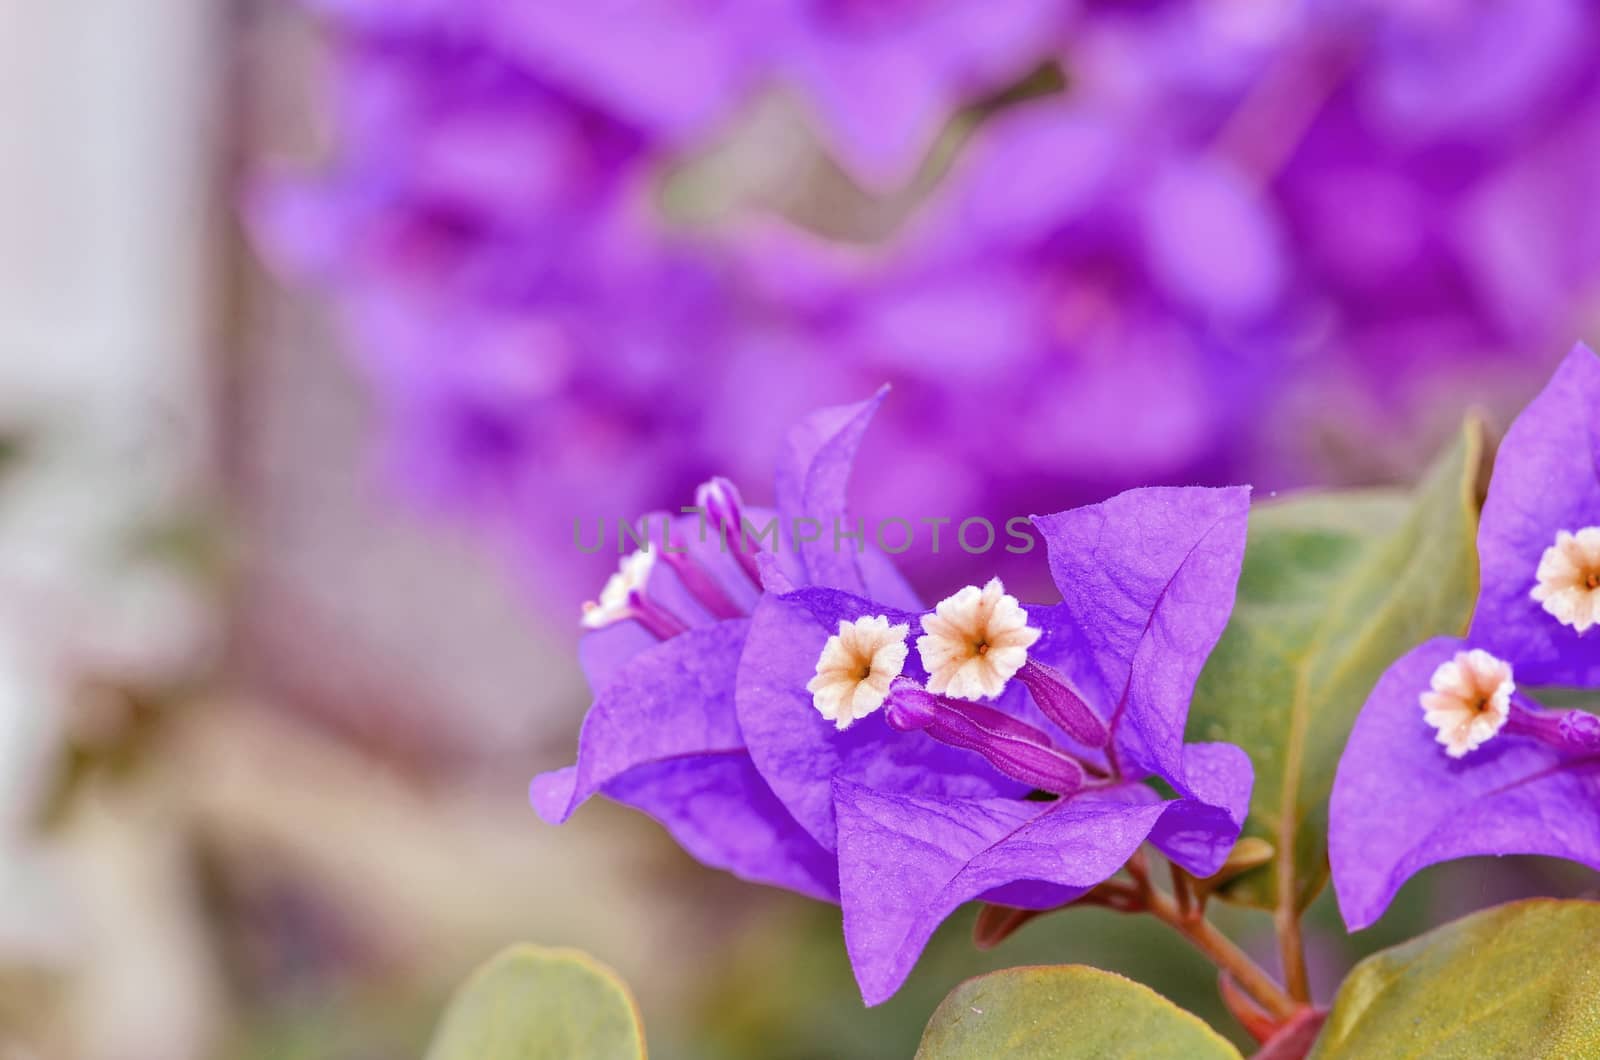 Bougainvillea flowers by raweenuttapong